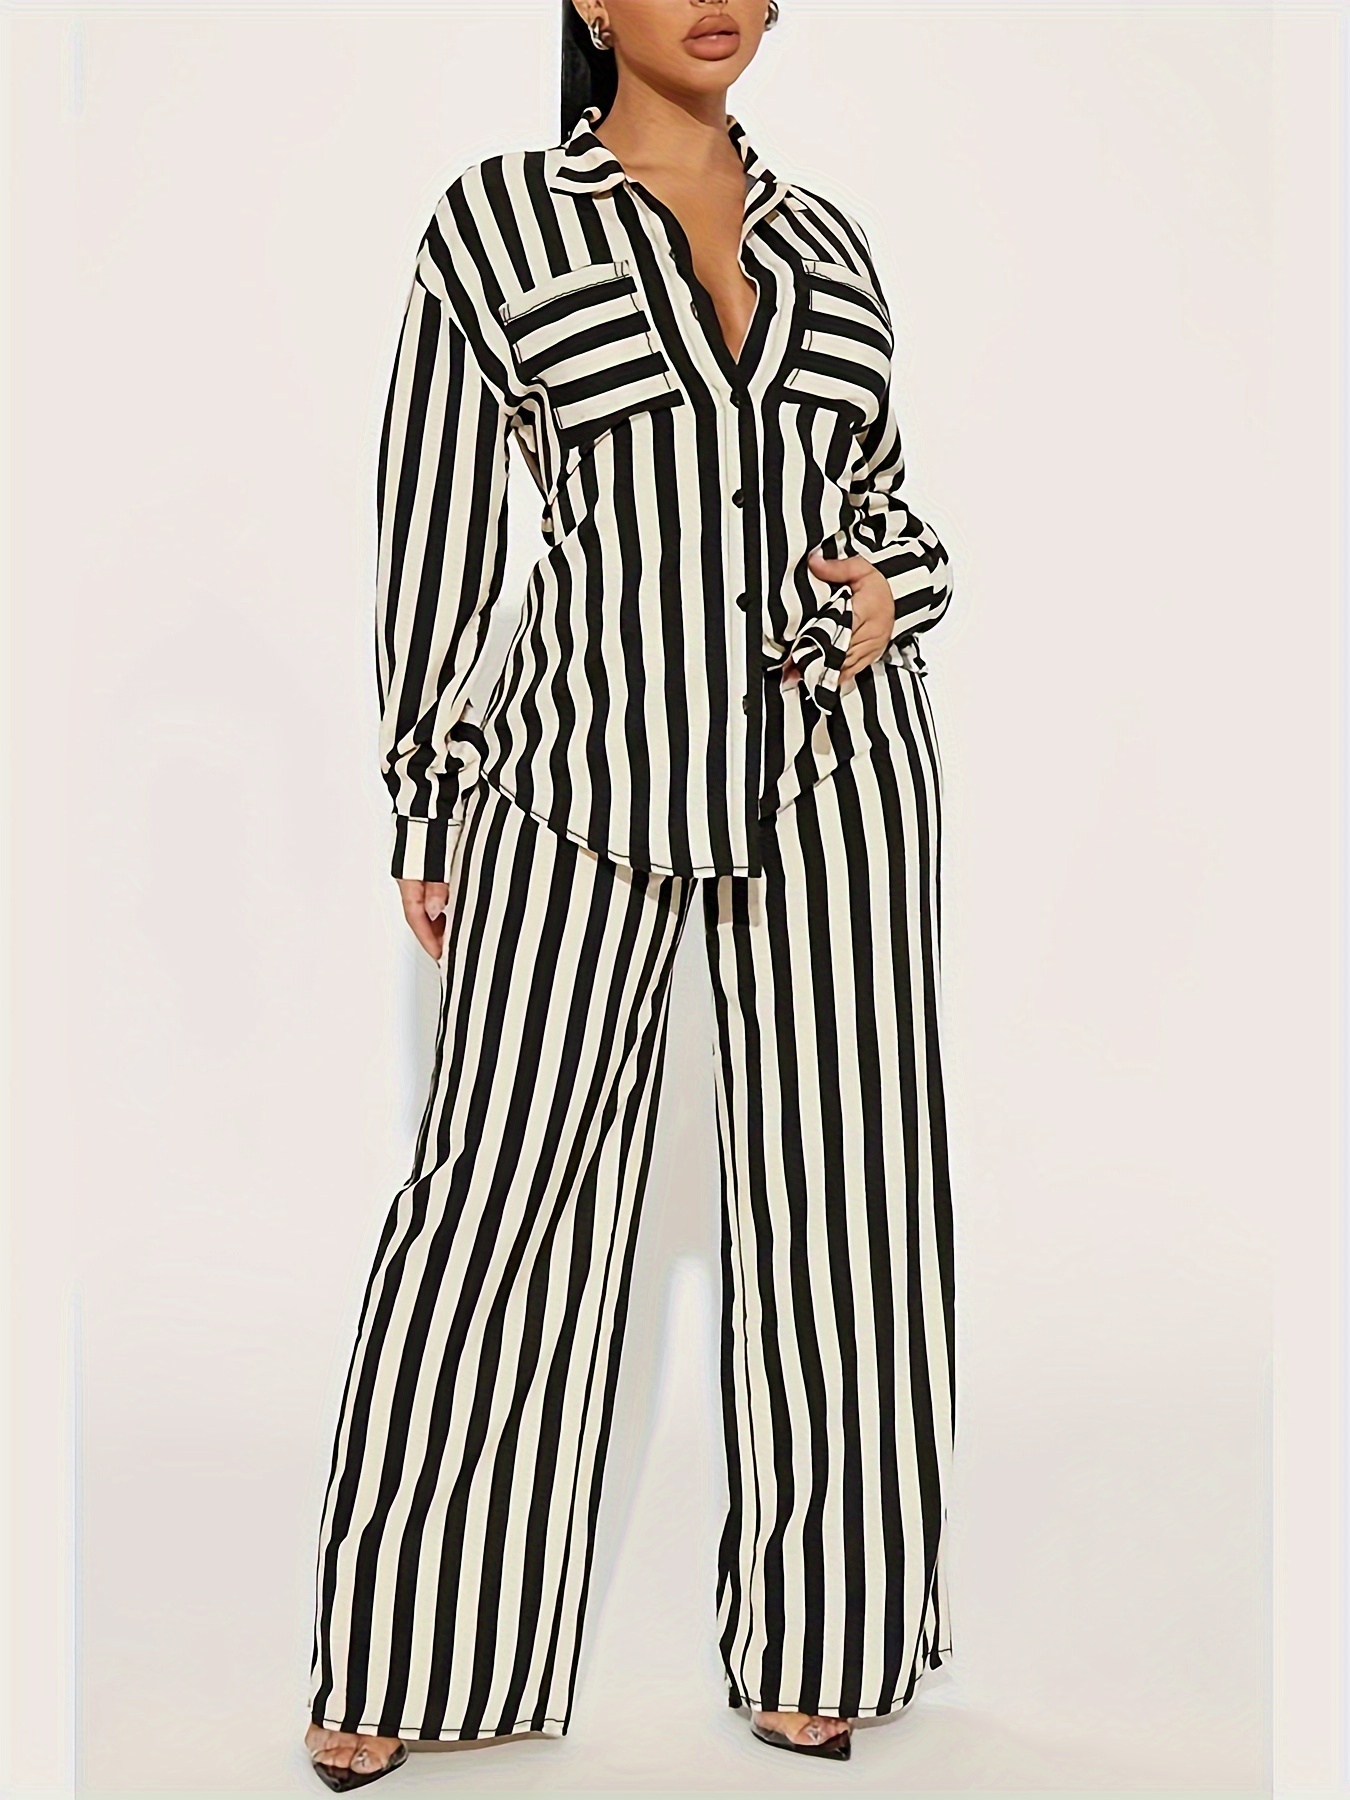 Stripe Up!!  Black and white striped pants, Black and white pants, Black  and white striped pants outfit